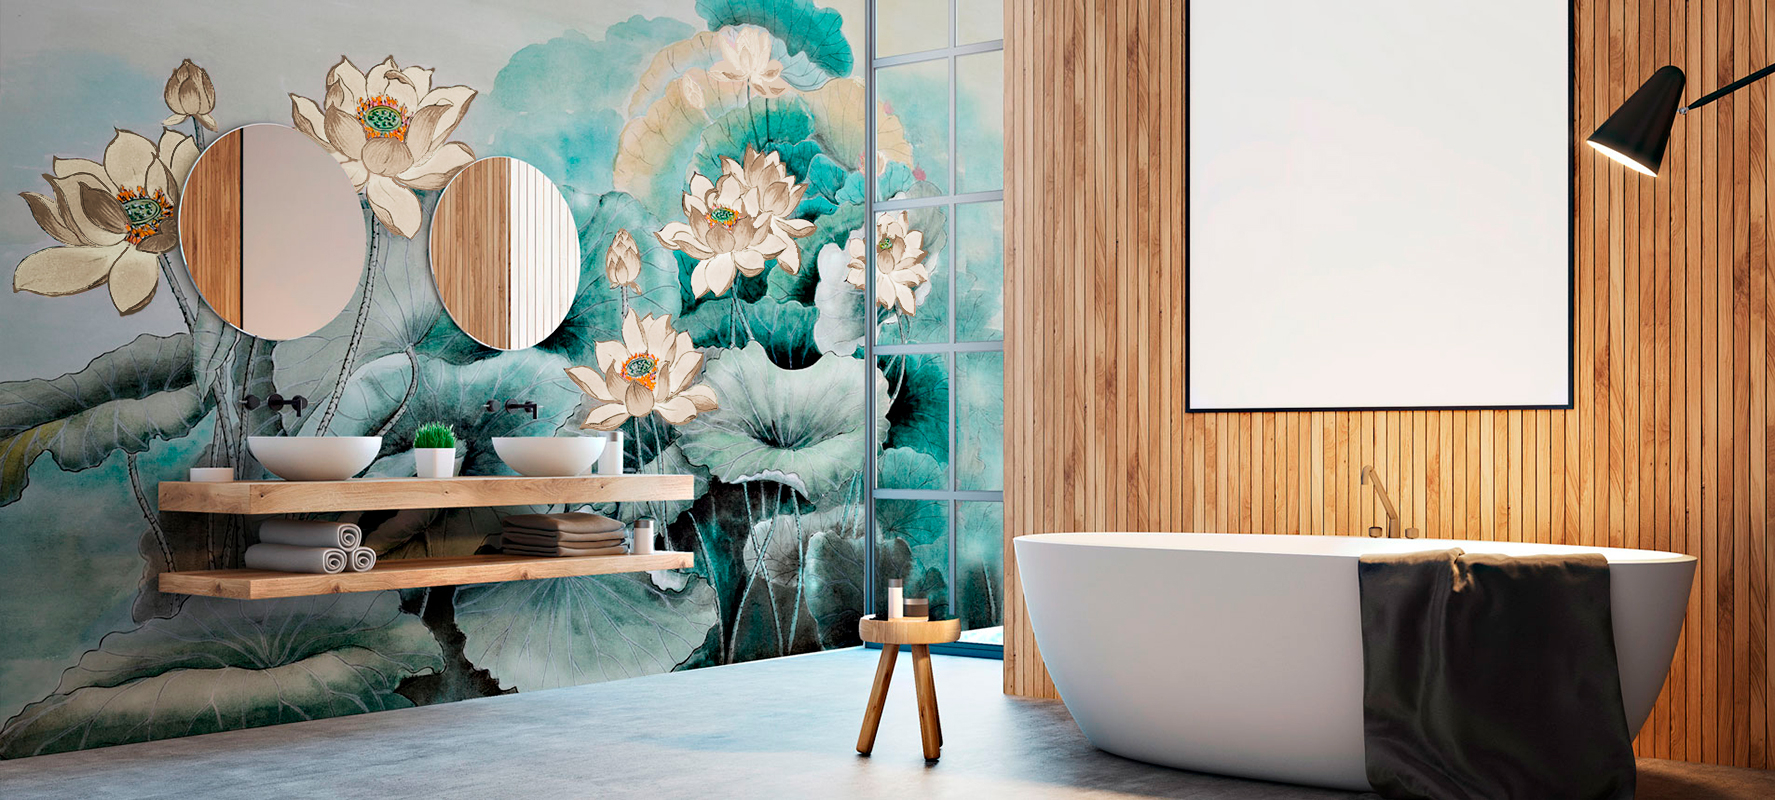 Waterproof  wallpapers for bathroom